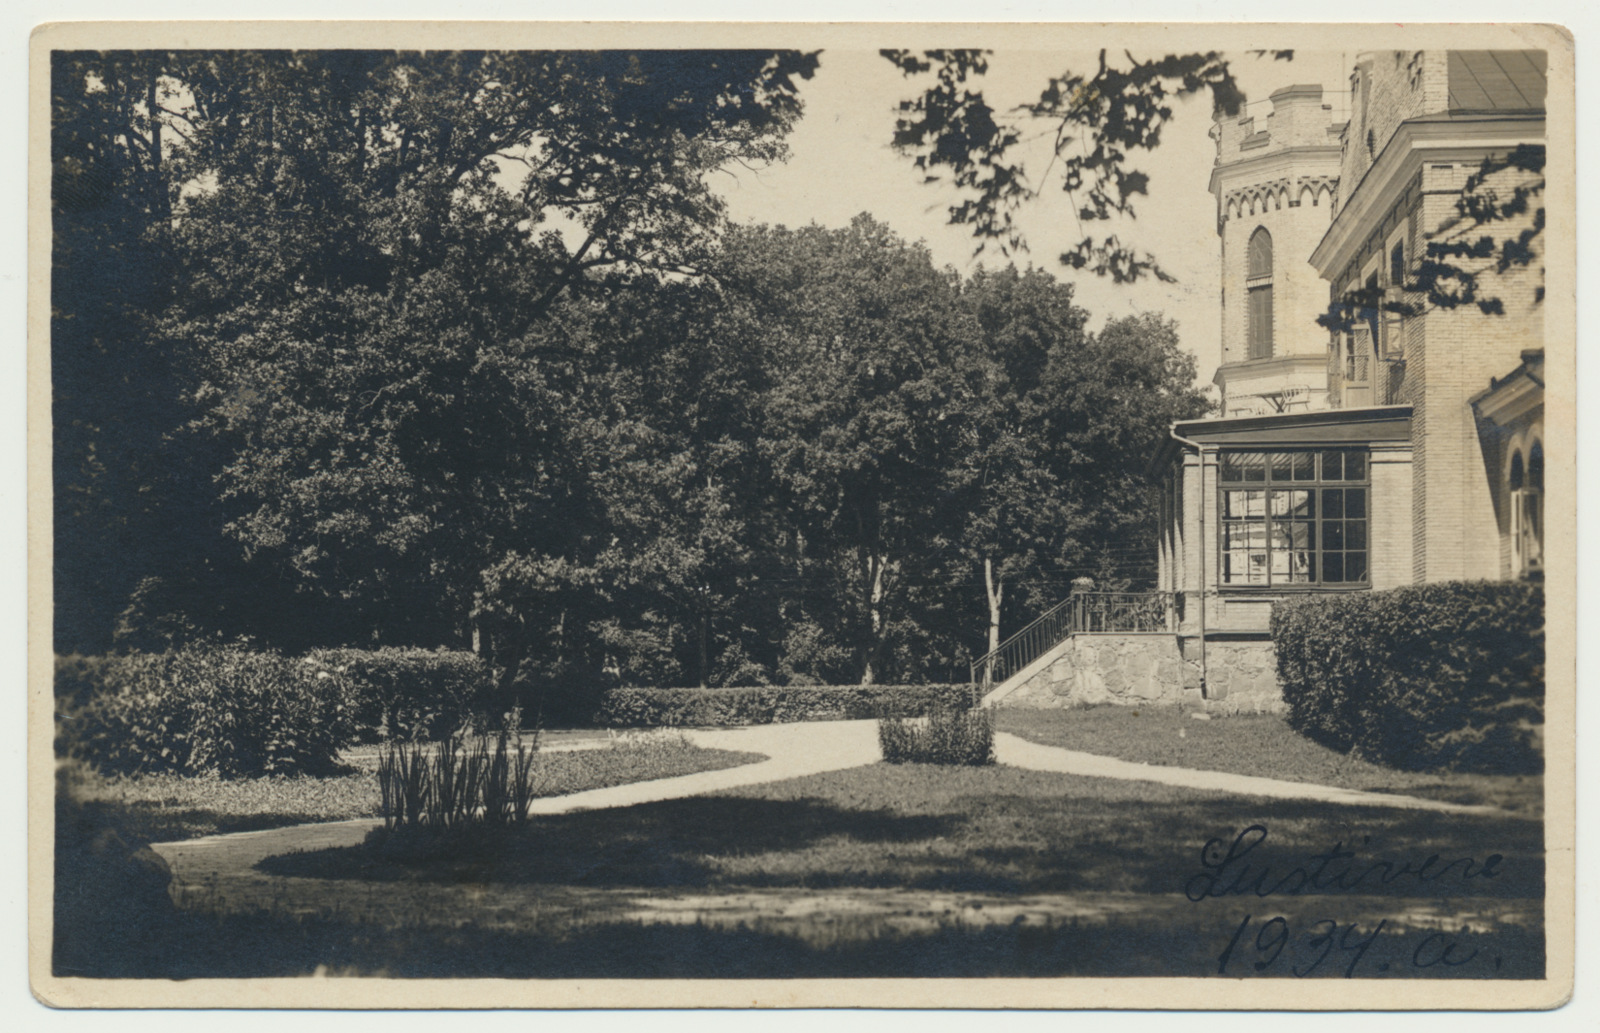 foto, Põltsamaa khk, Lustivere mõis, peahoone, aed, u 1934, foto A. Michelson